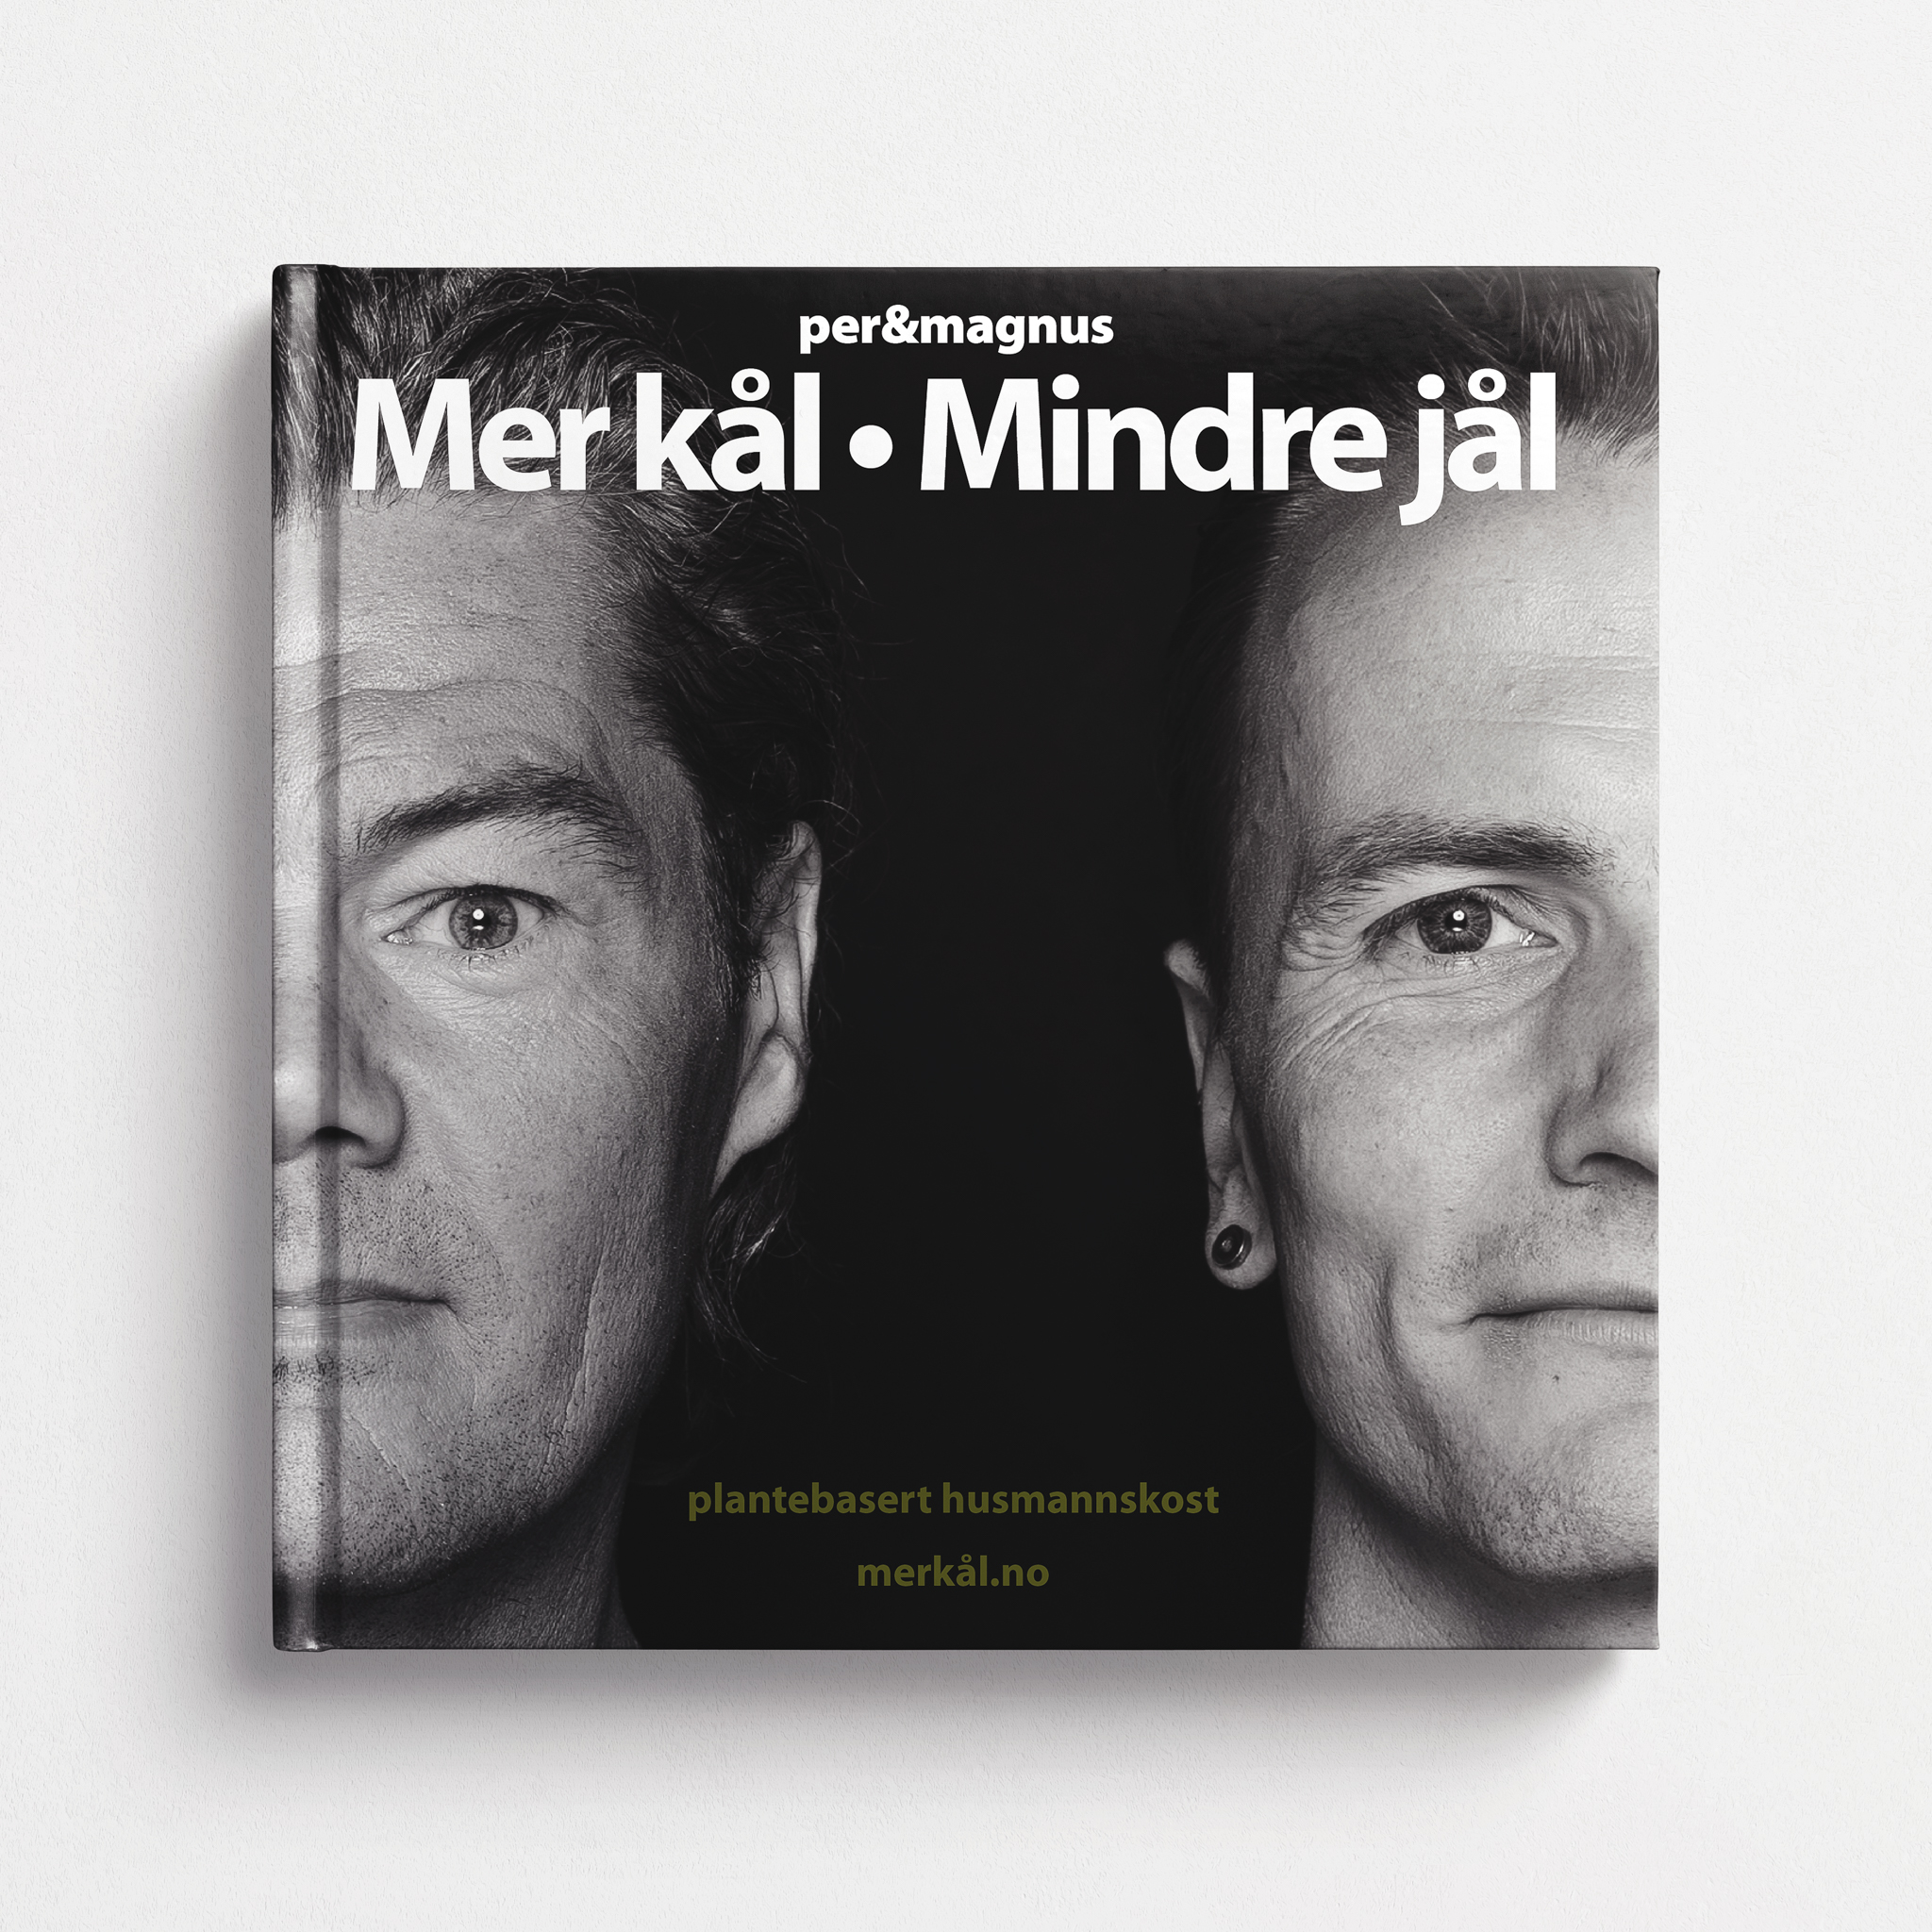 Book Arte Momentum fotograf Mer kål Mindre jål.jpg